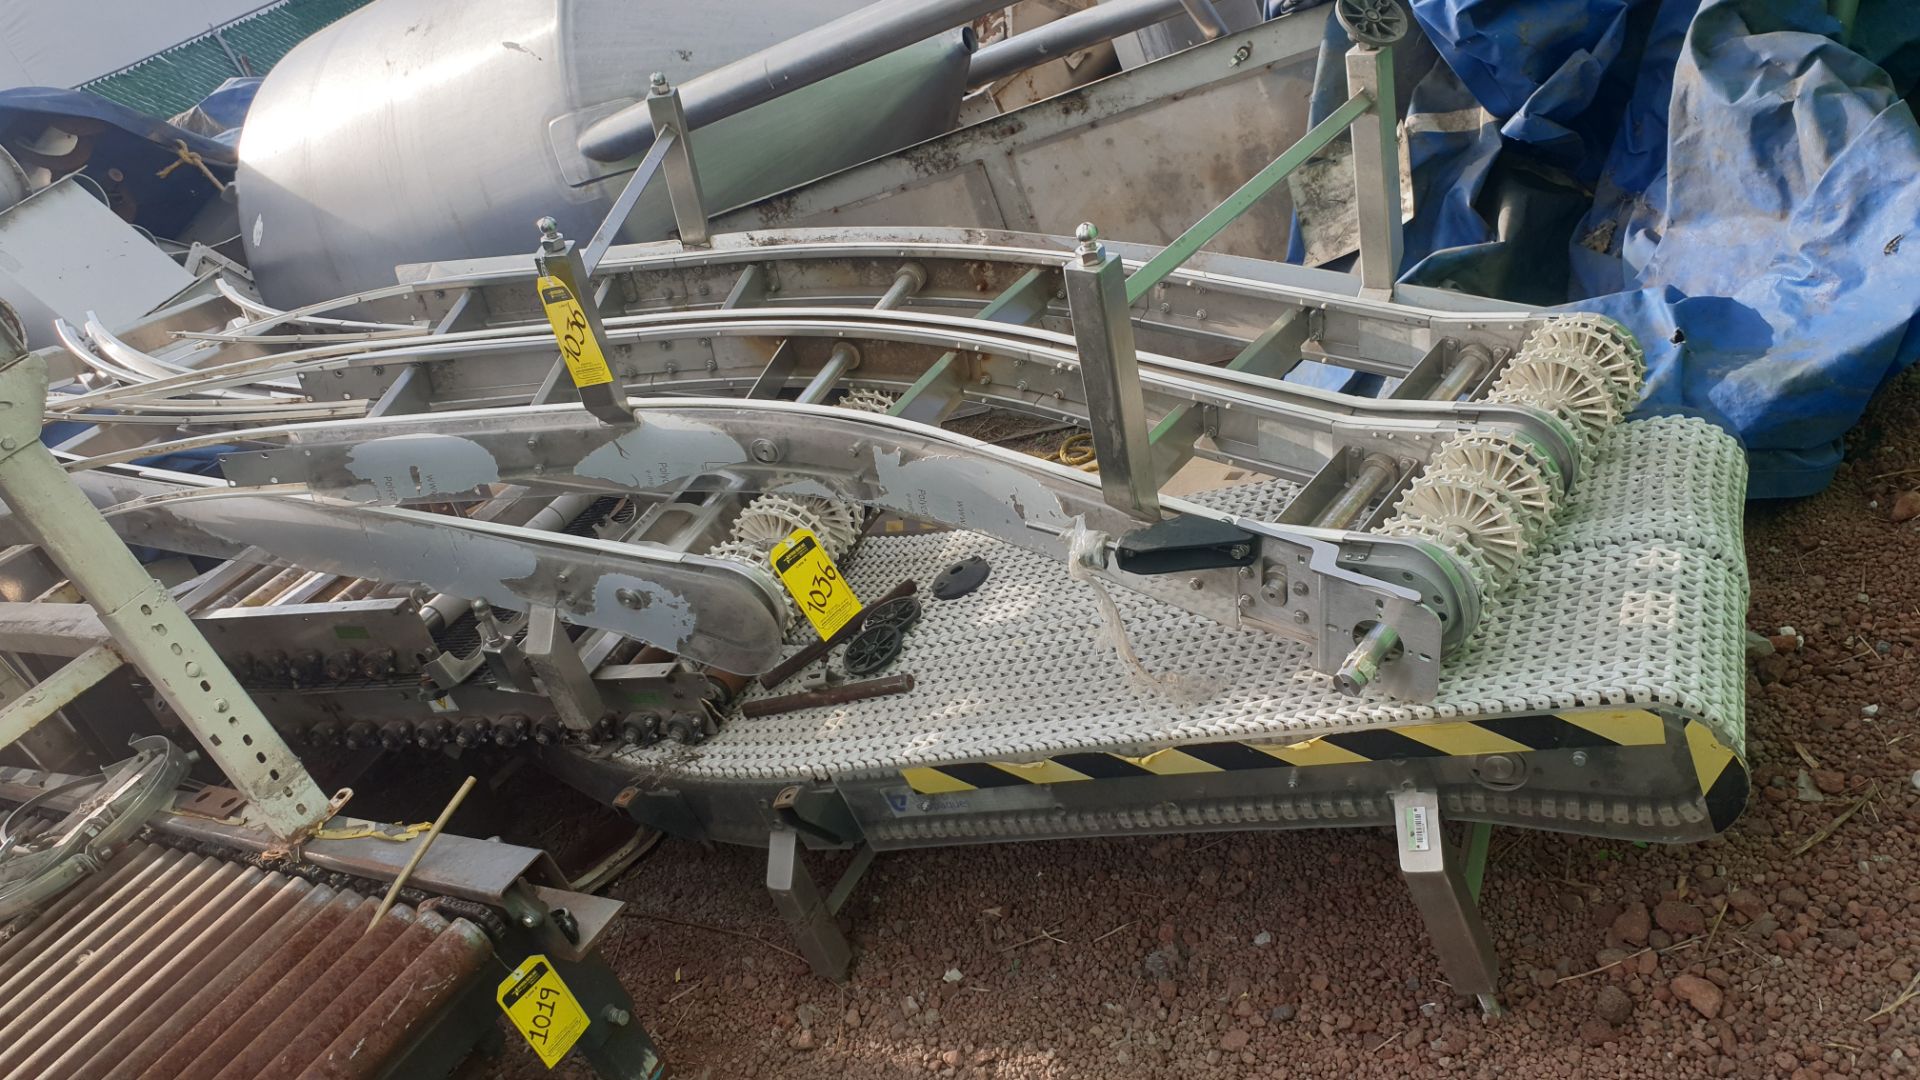 S conveyor belt batch. Please inspect - Image 9 of 9